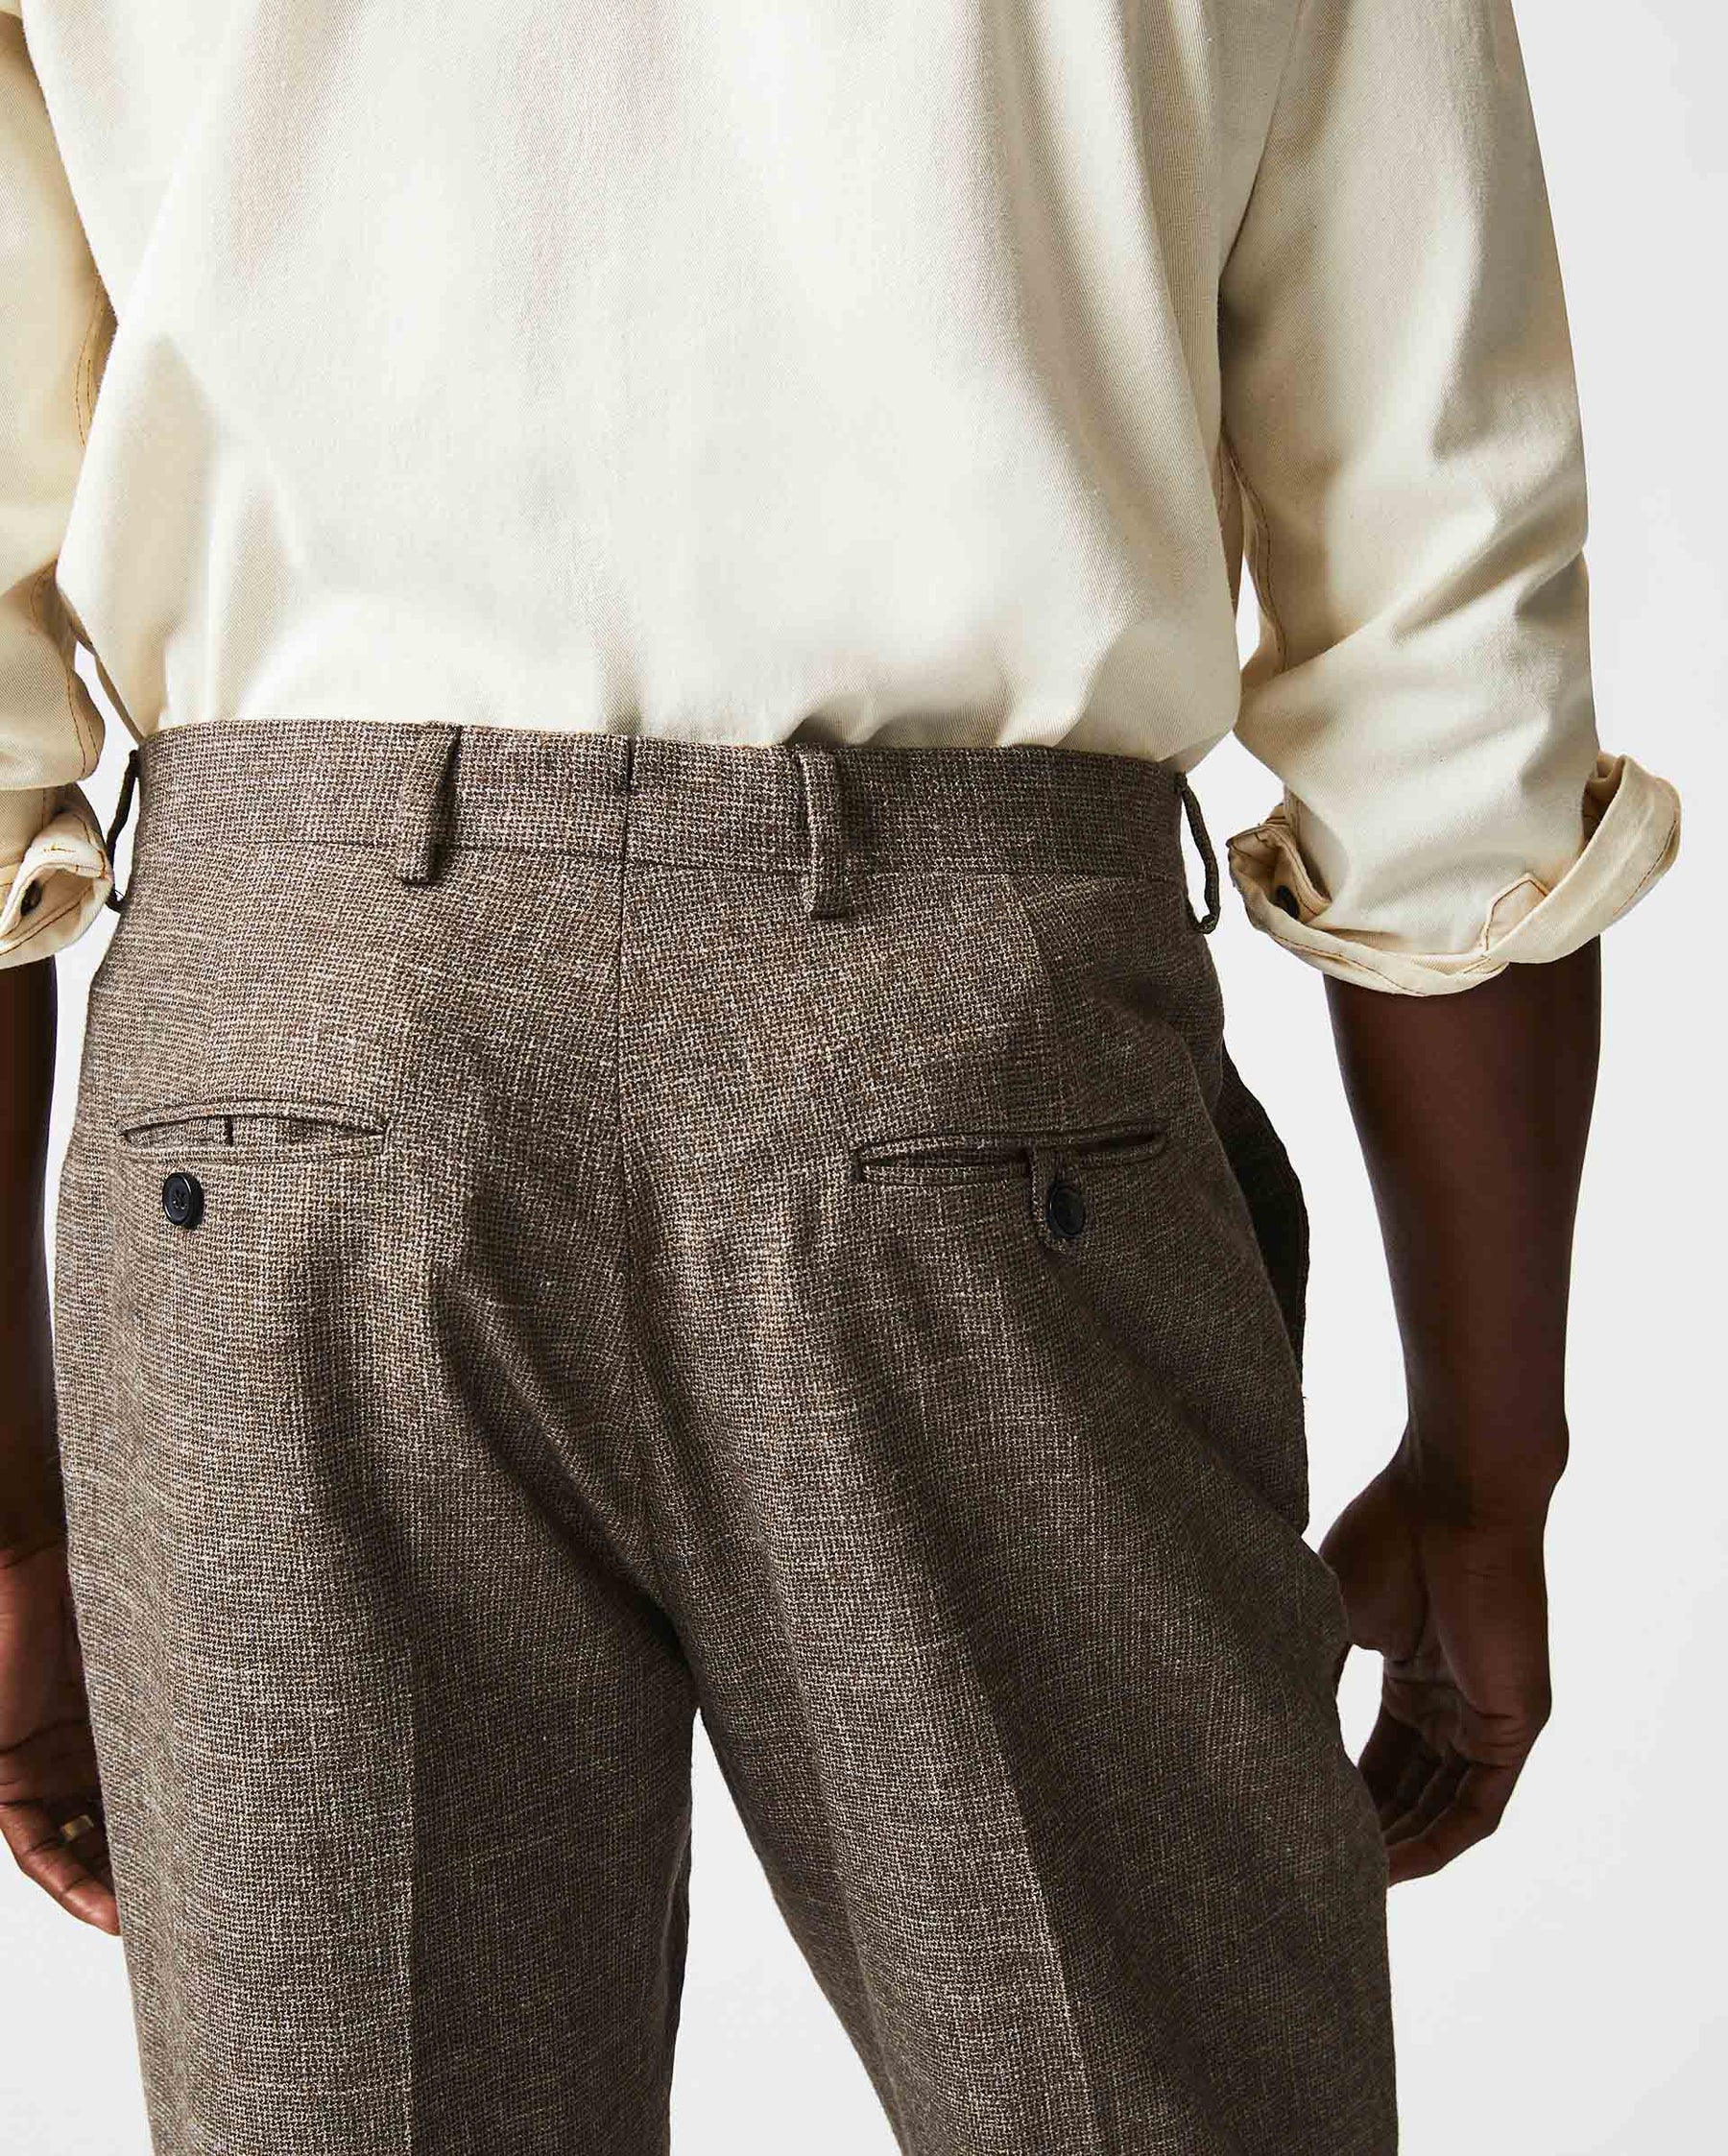 What are Dress Slacks & 10 Best Slacks for Men - Suits Expert